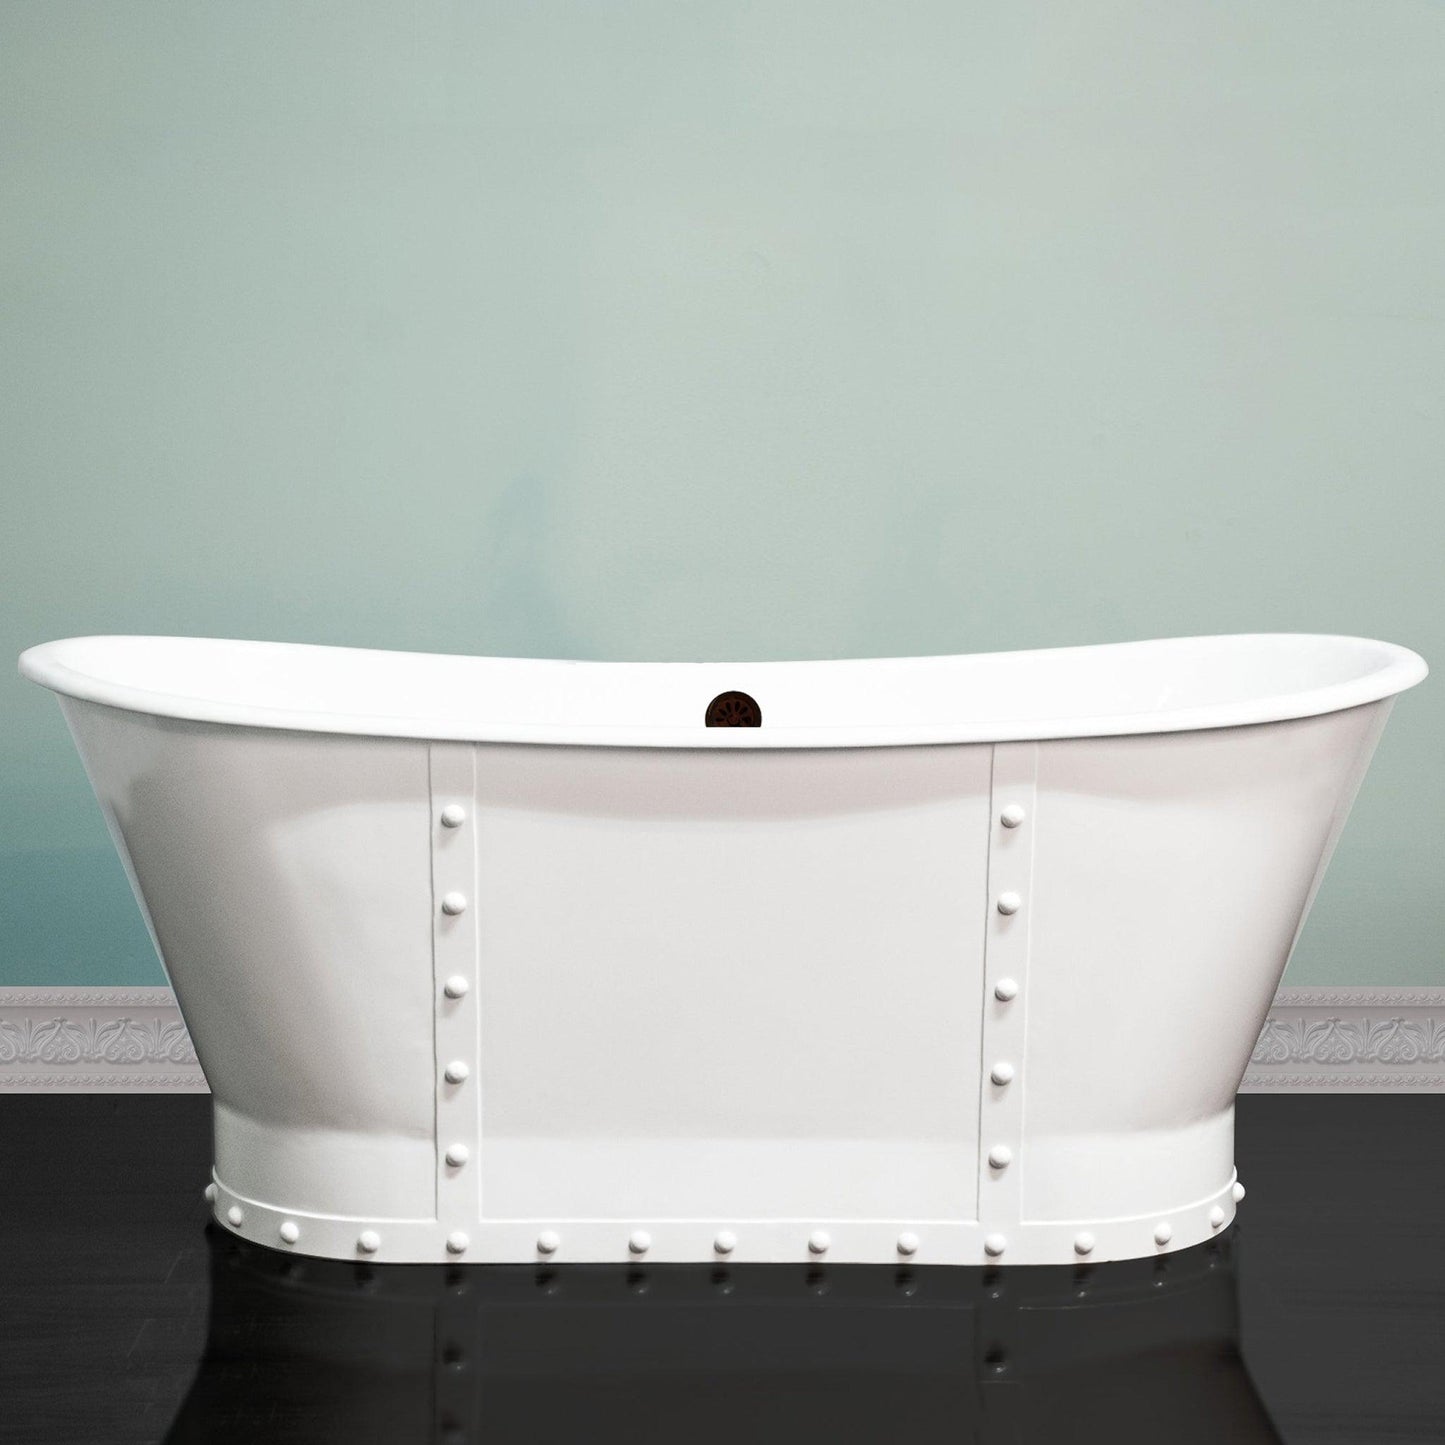 Cambridge Plumbing 67" White Cast Iron Riveted Double Slipper Pedestal Bathtub With No Deck Holes